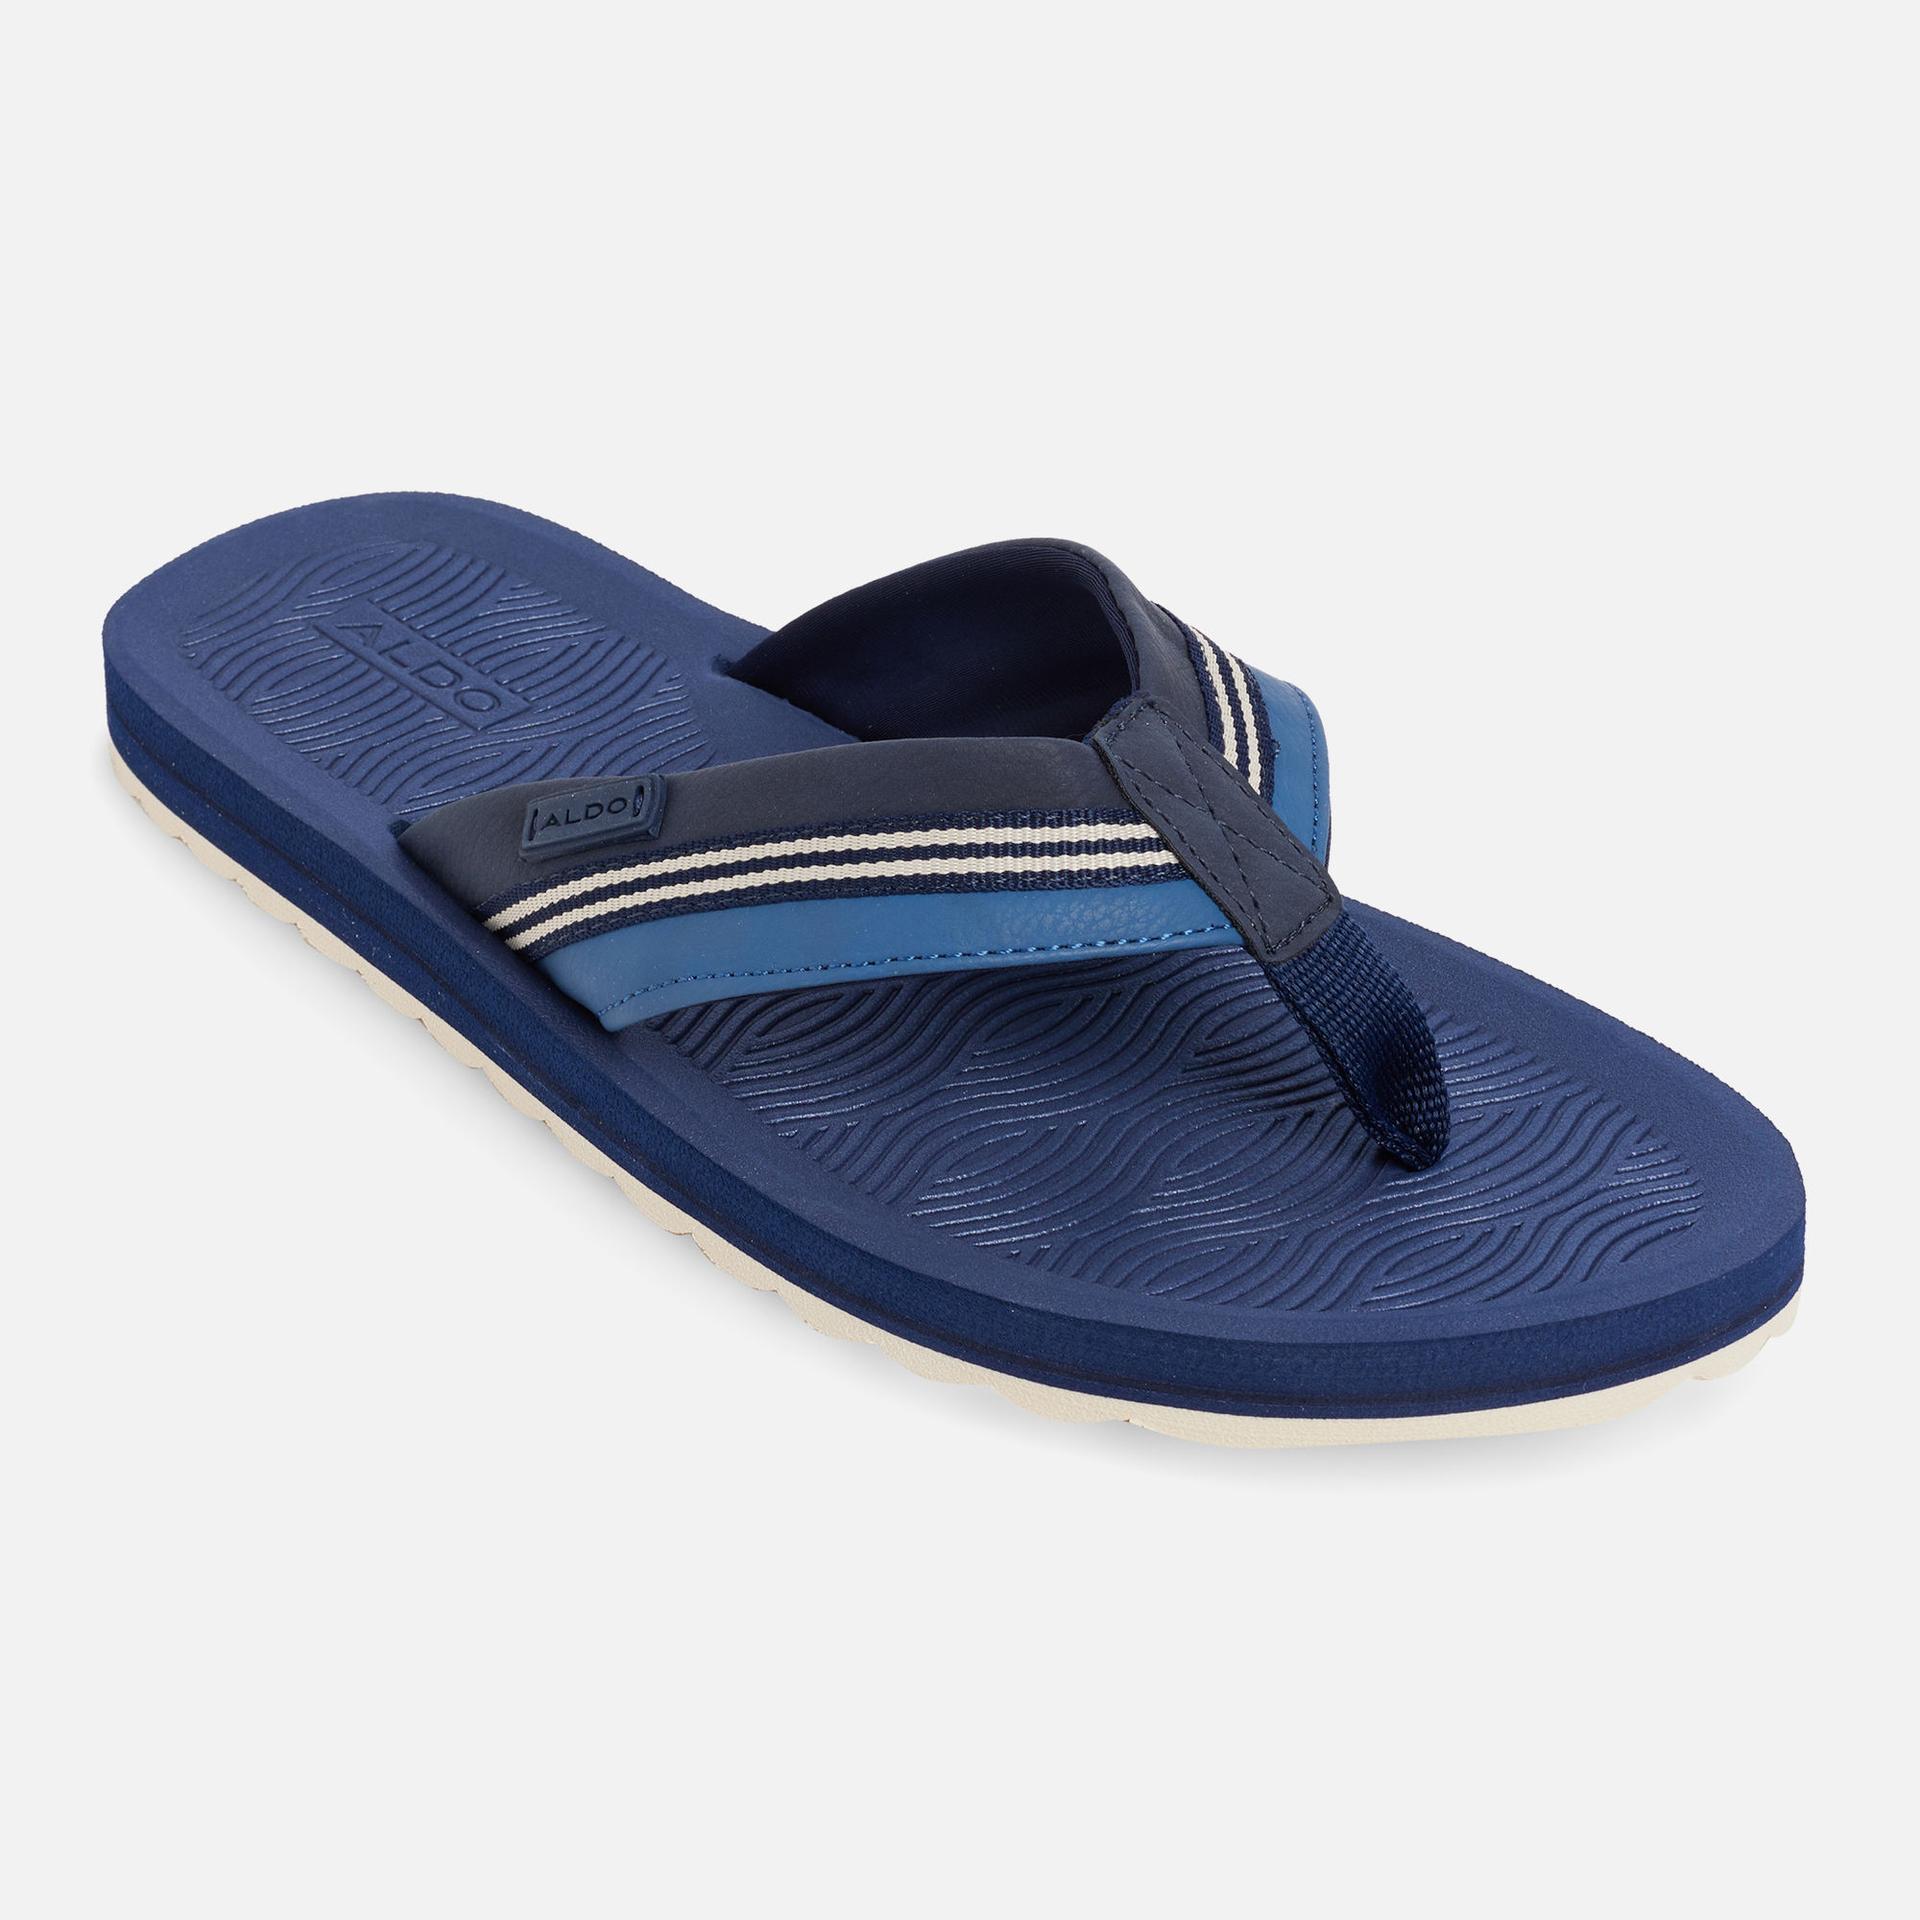 burges solid blue sandals